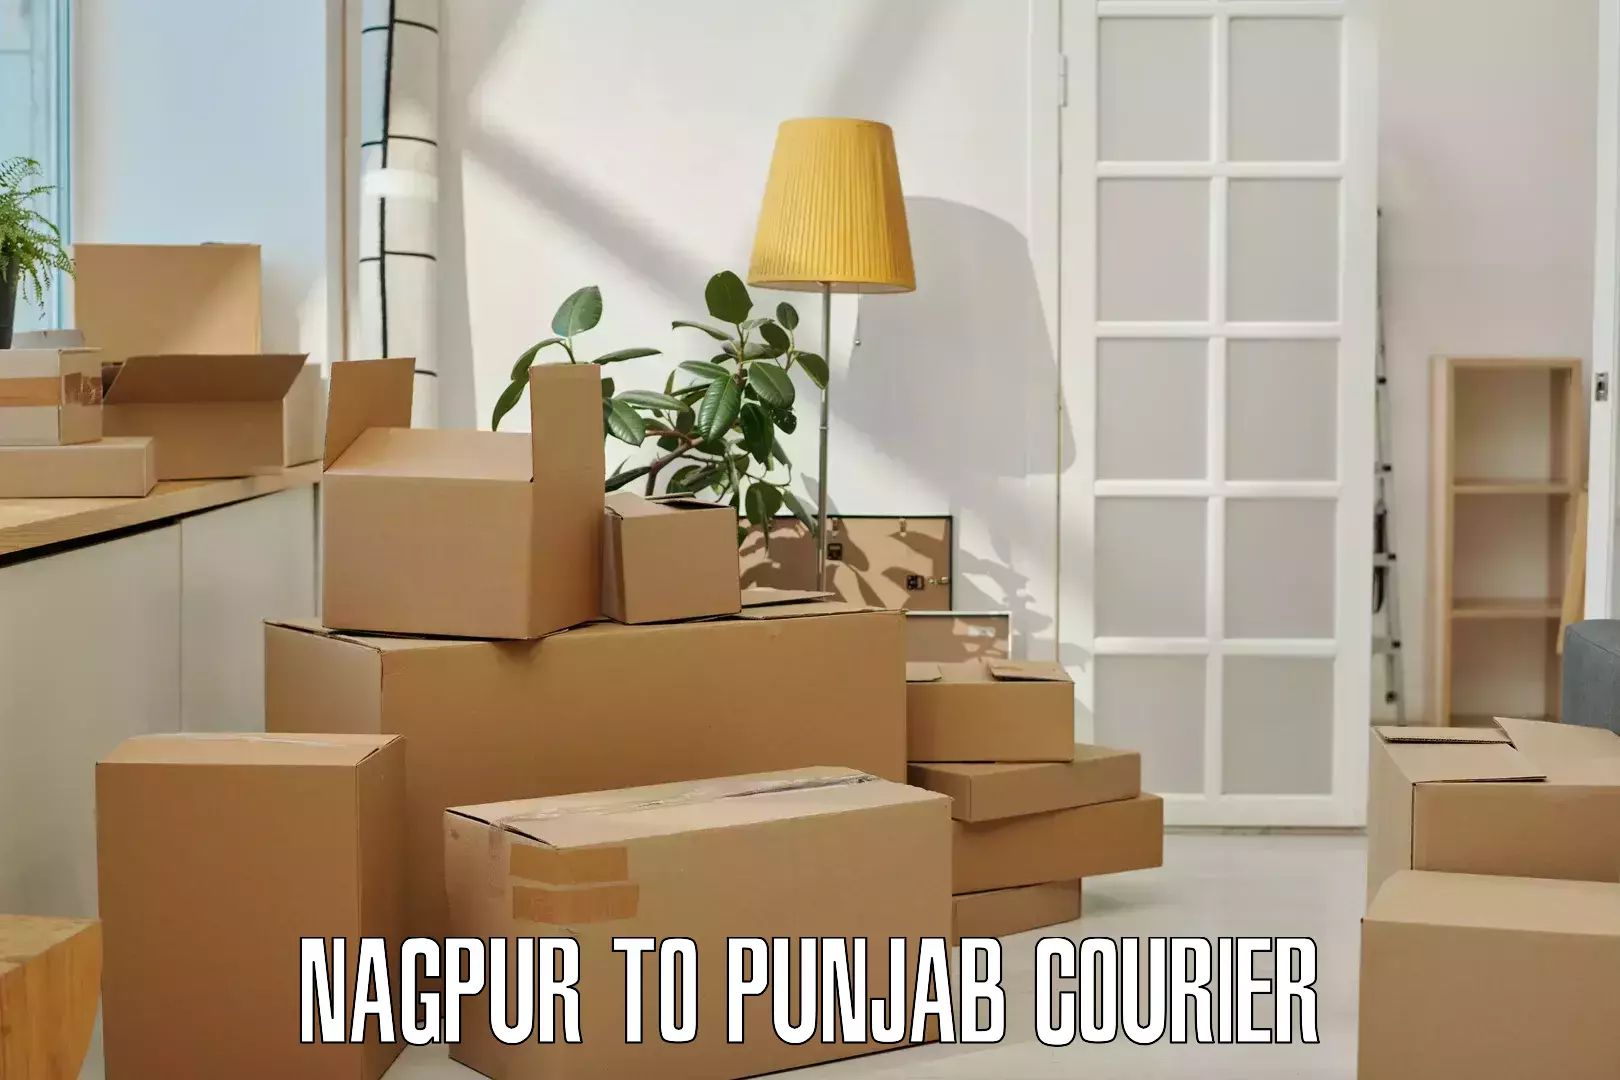 Courier service innovation Nagpur to Punjab